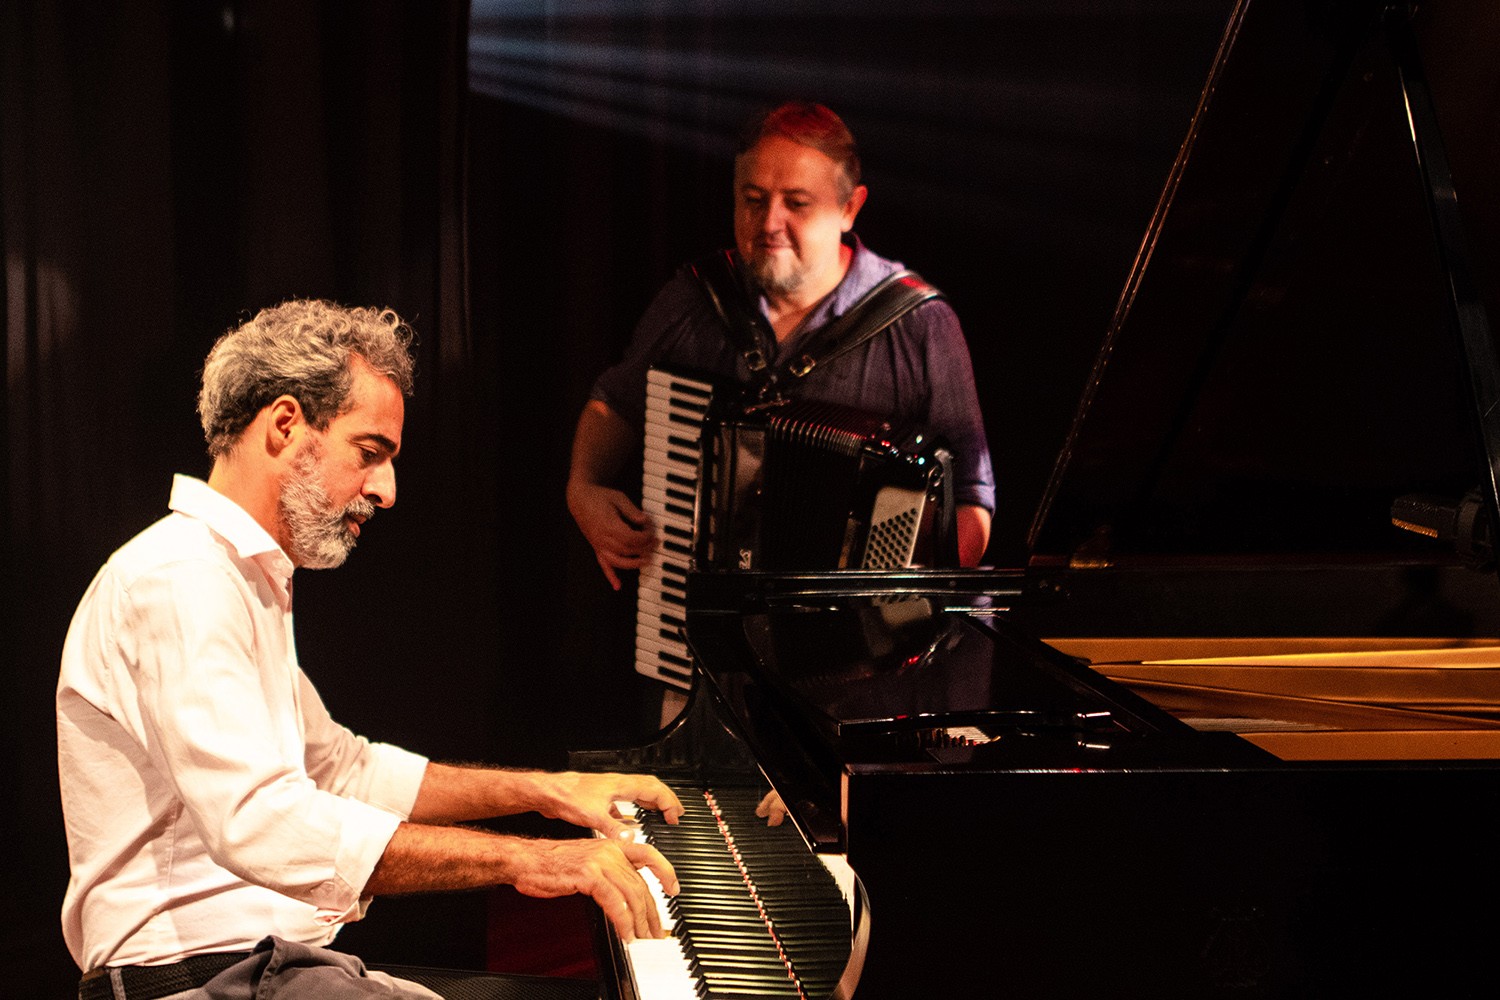 Pianista Pedro de Alcântara põe o acordeonista Bebê Kramer no barco de álbum instrumental